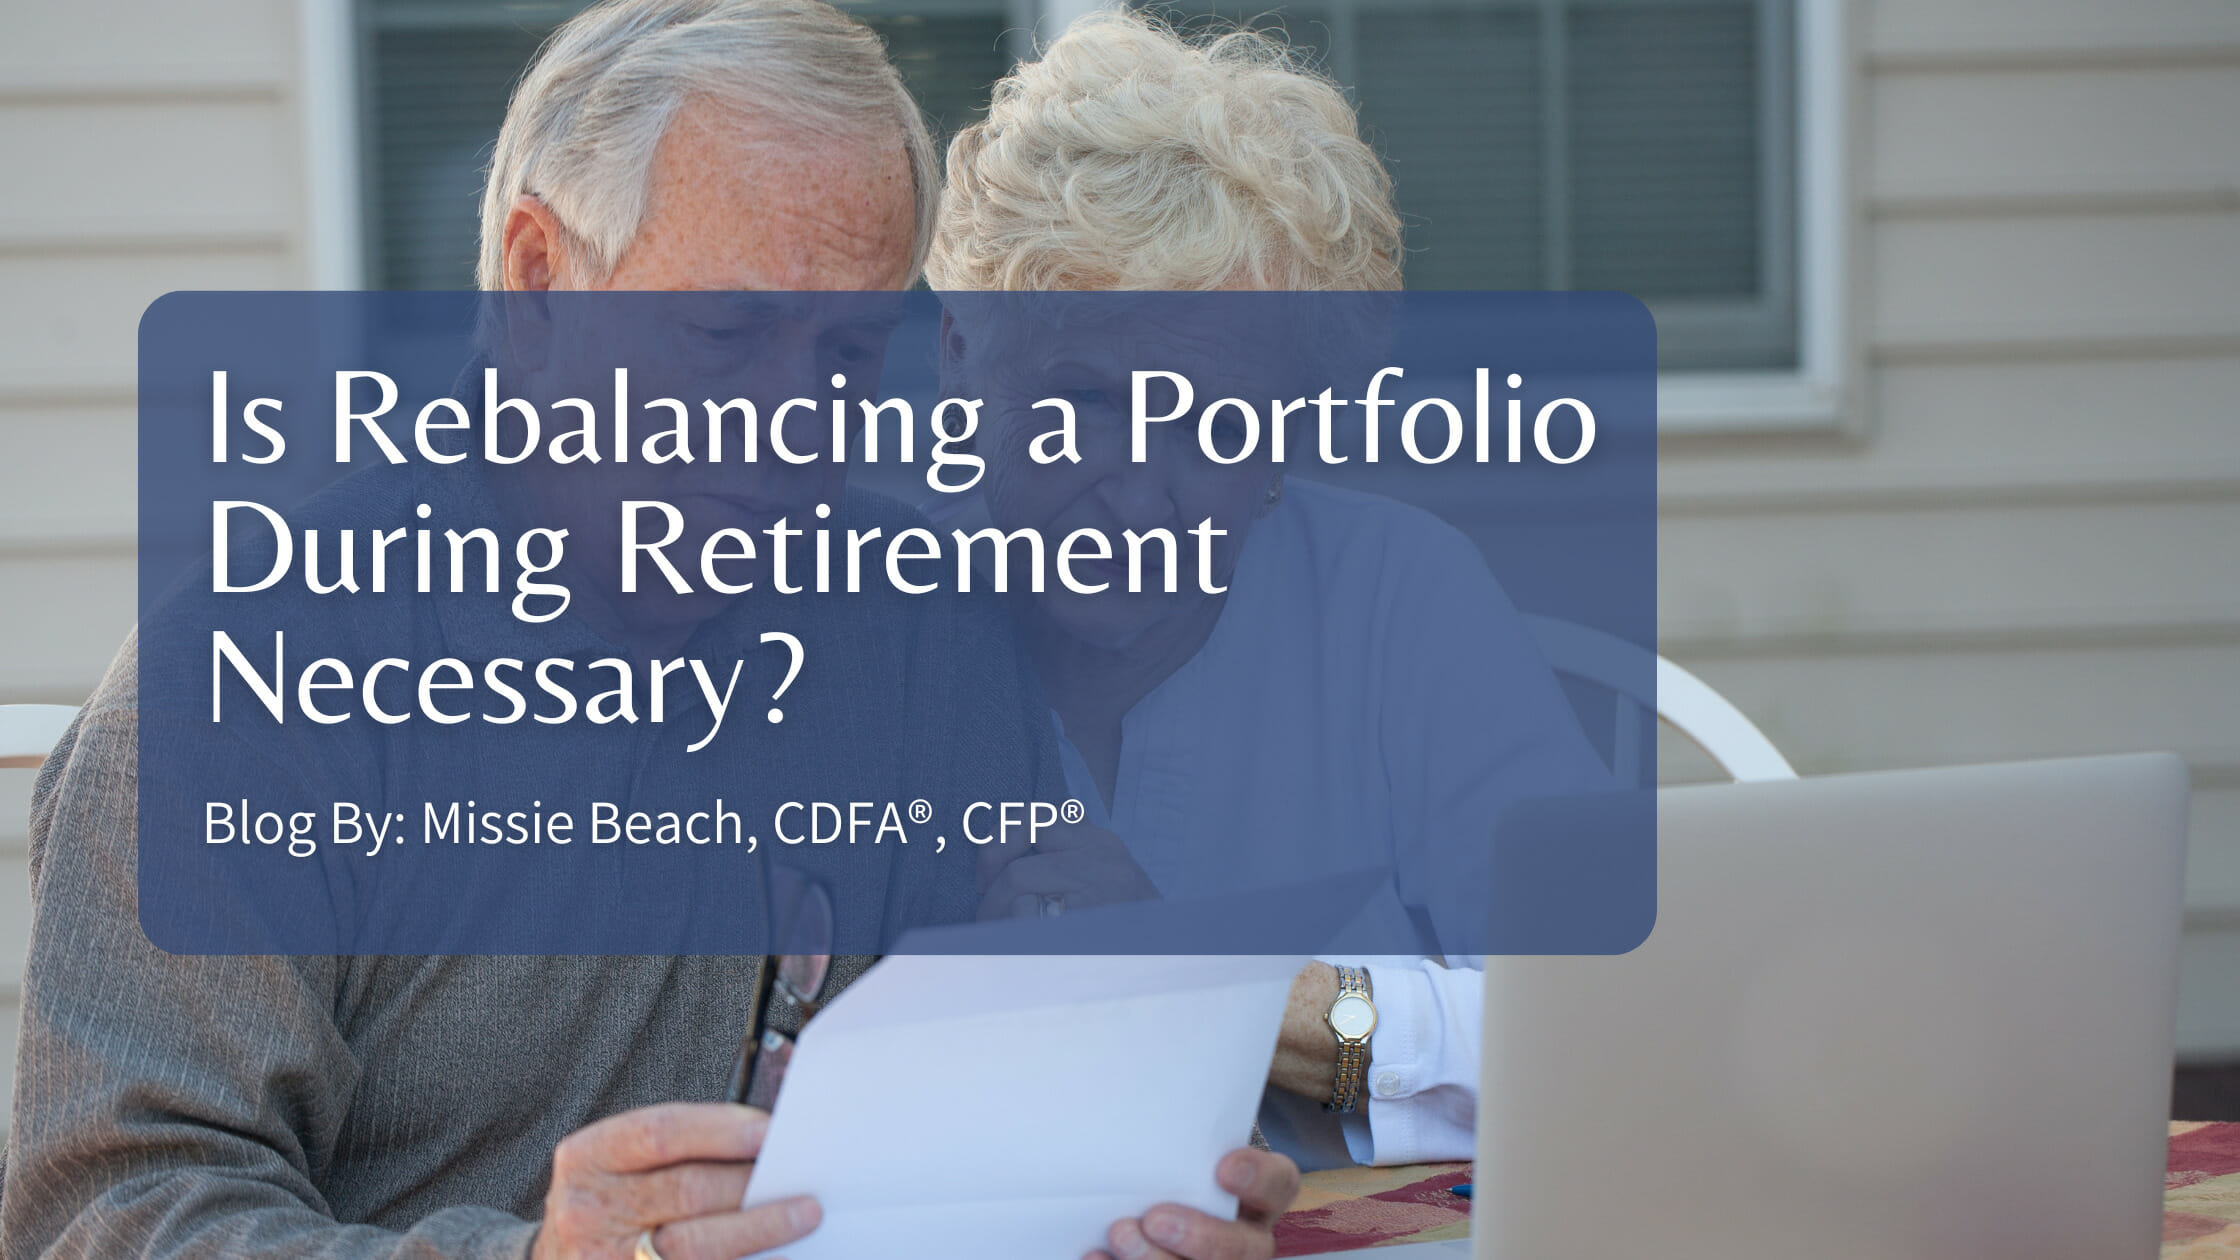 Is rebalancing a portfolio during retirement necessary?